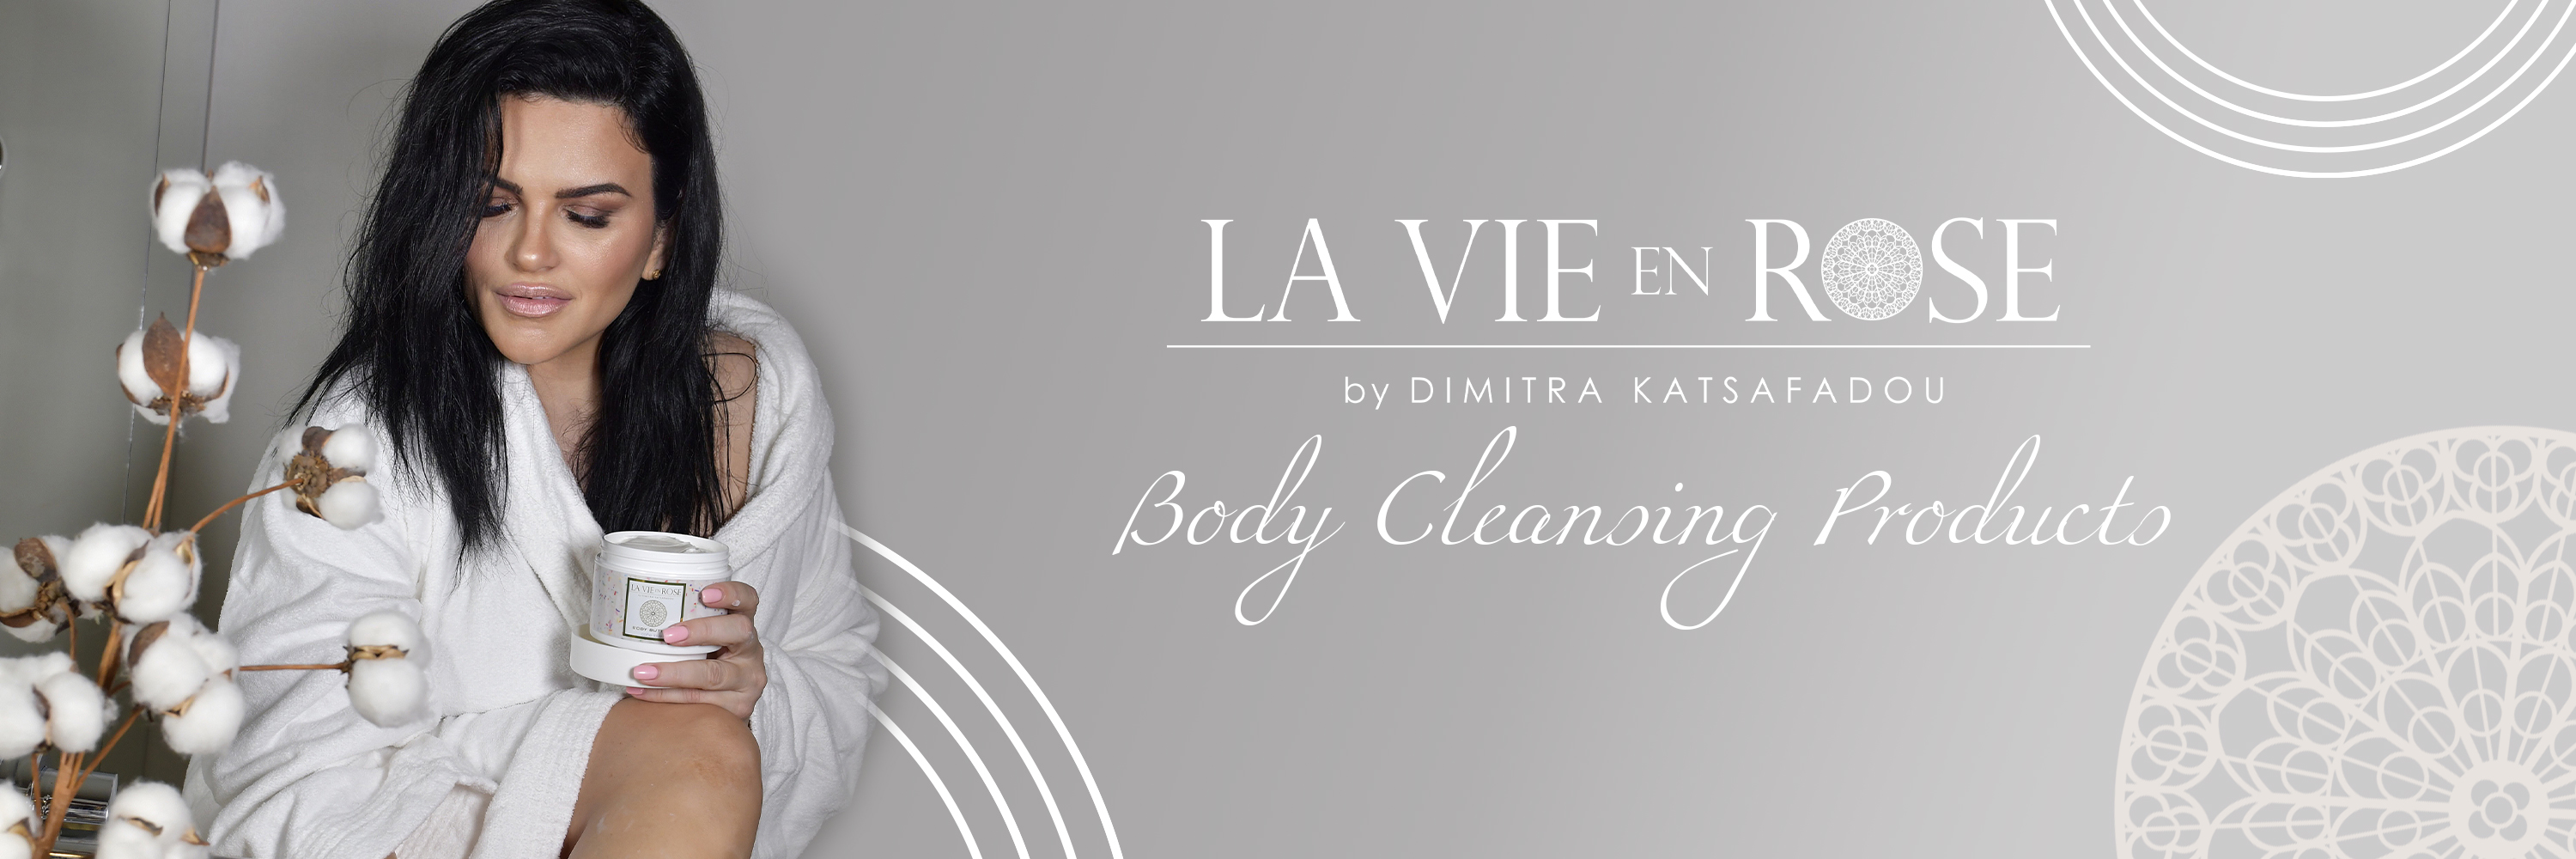 Body cleansing products La Vie en Rose